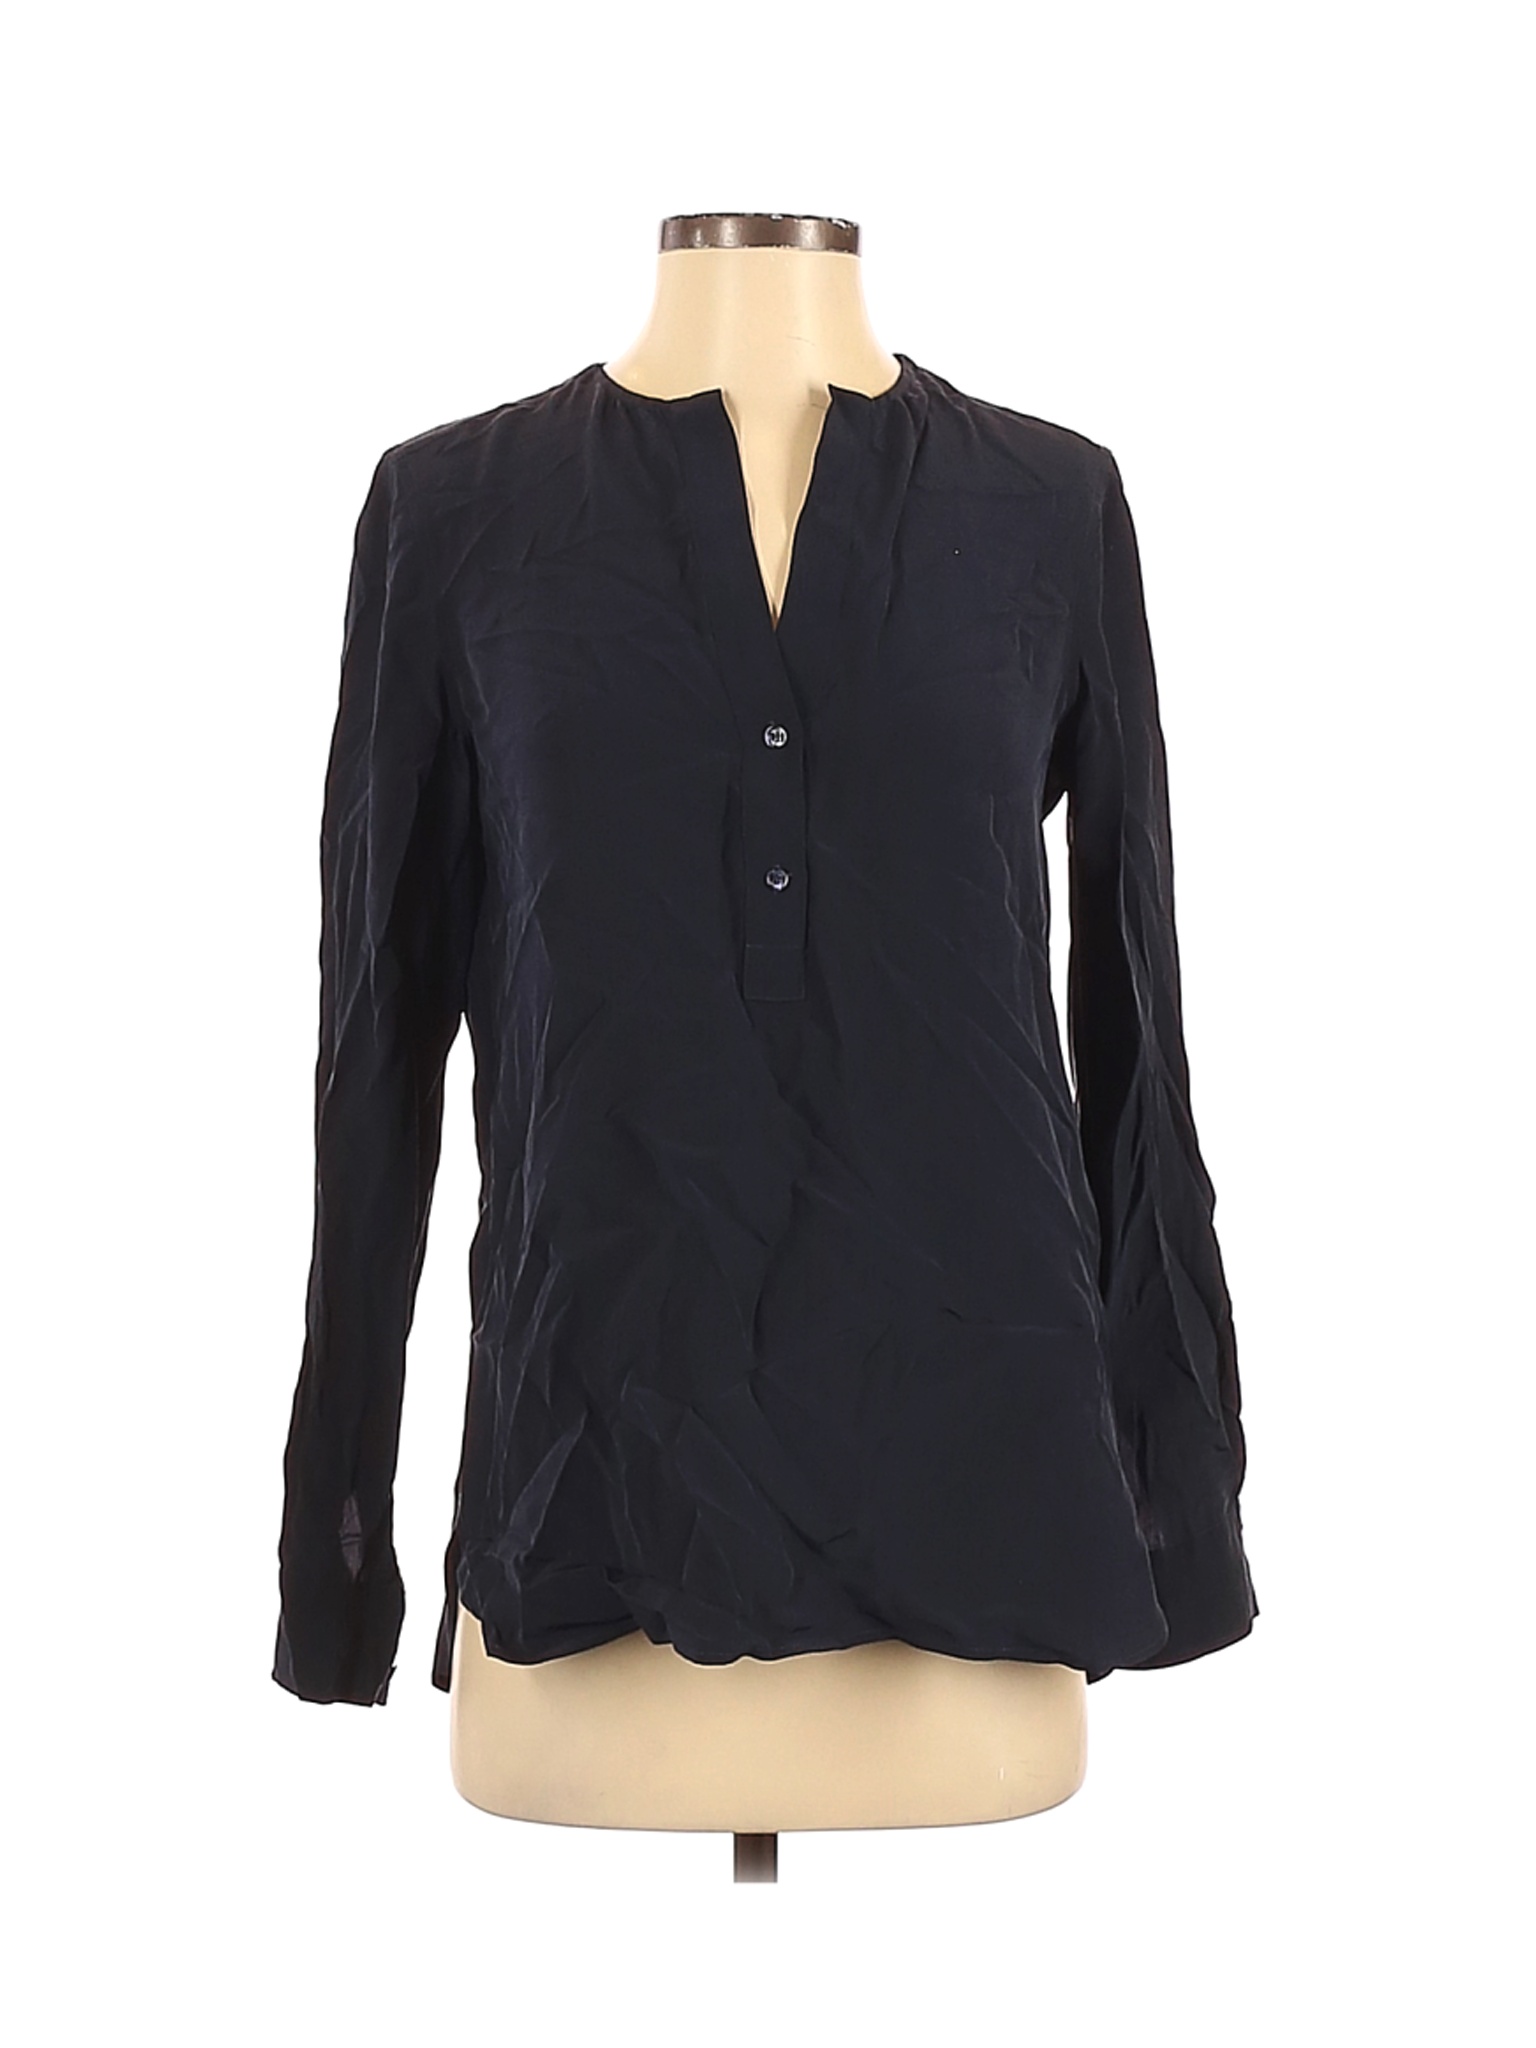 Vince. Women Black Long Sleeve Silk Top 4 | eBay